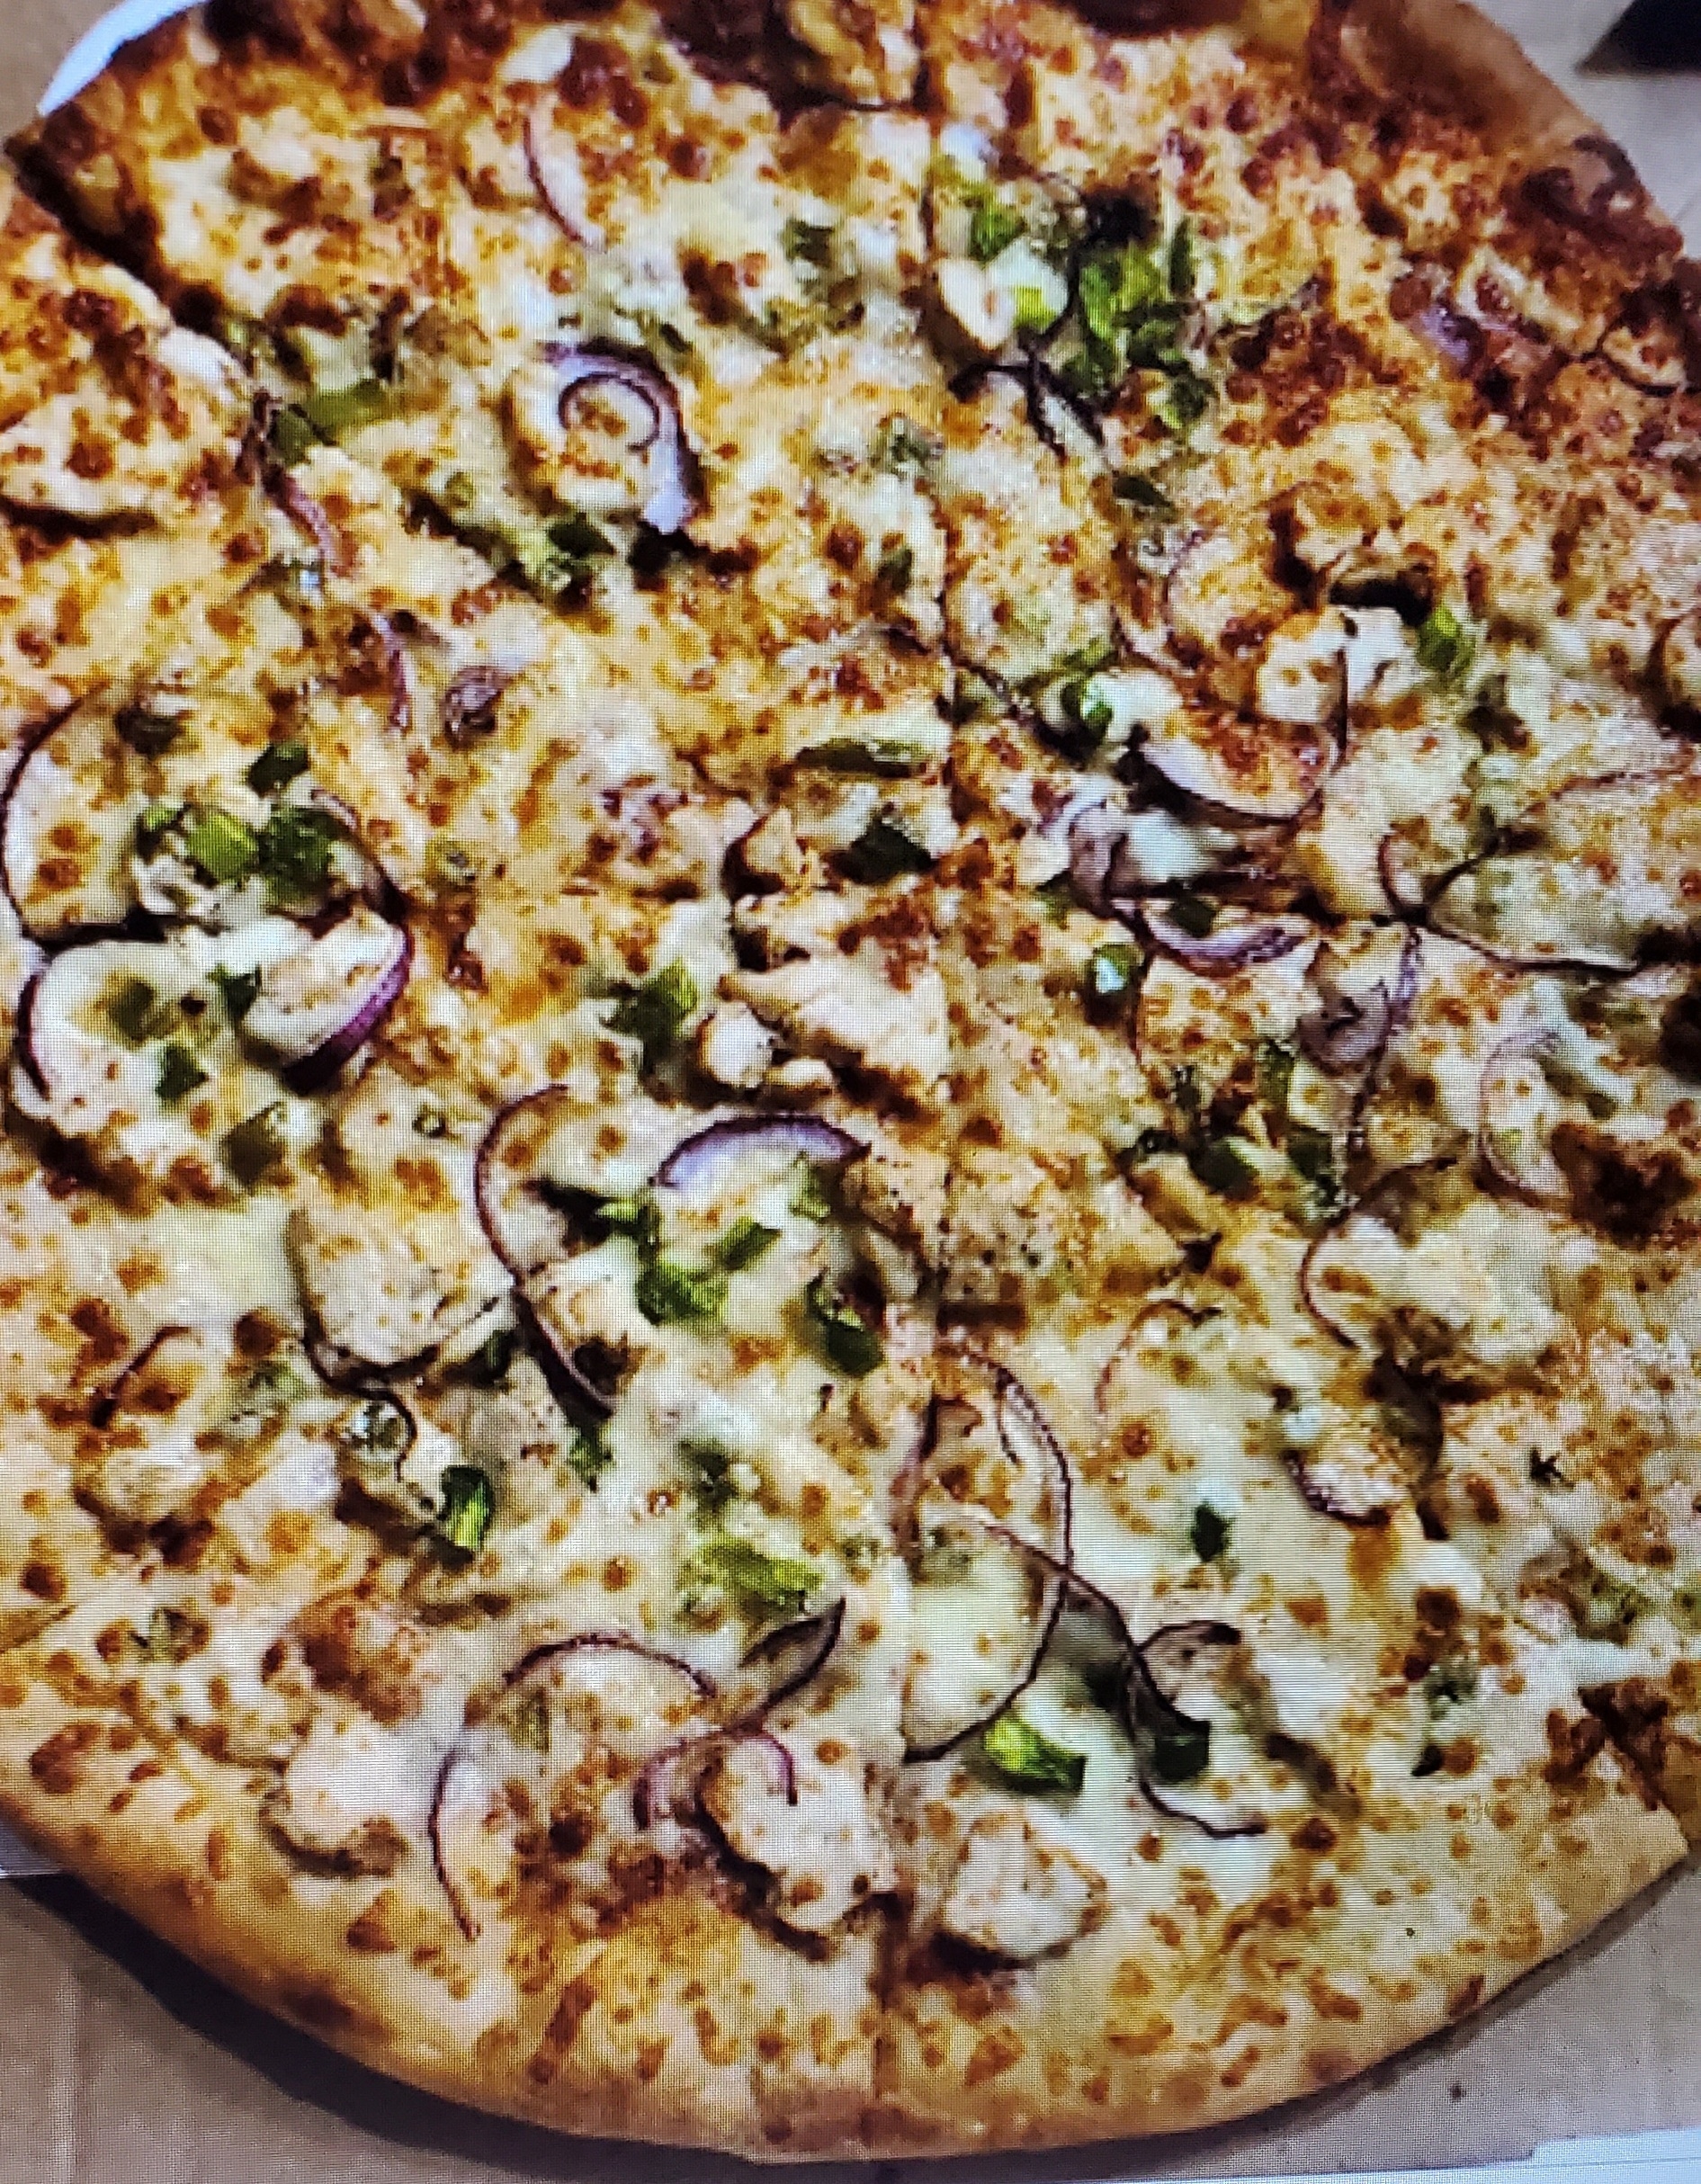 Malai Chicken Pizza (14" Large)